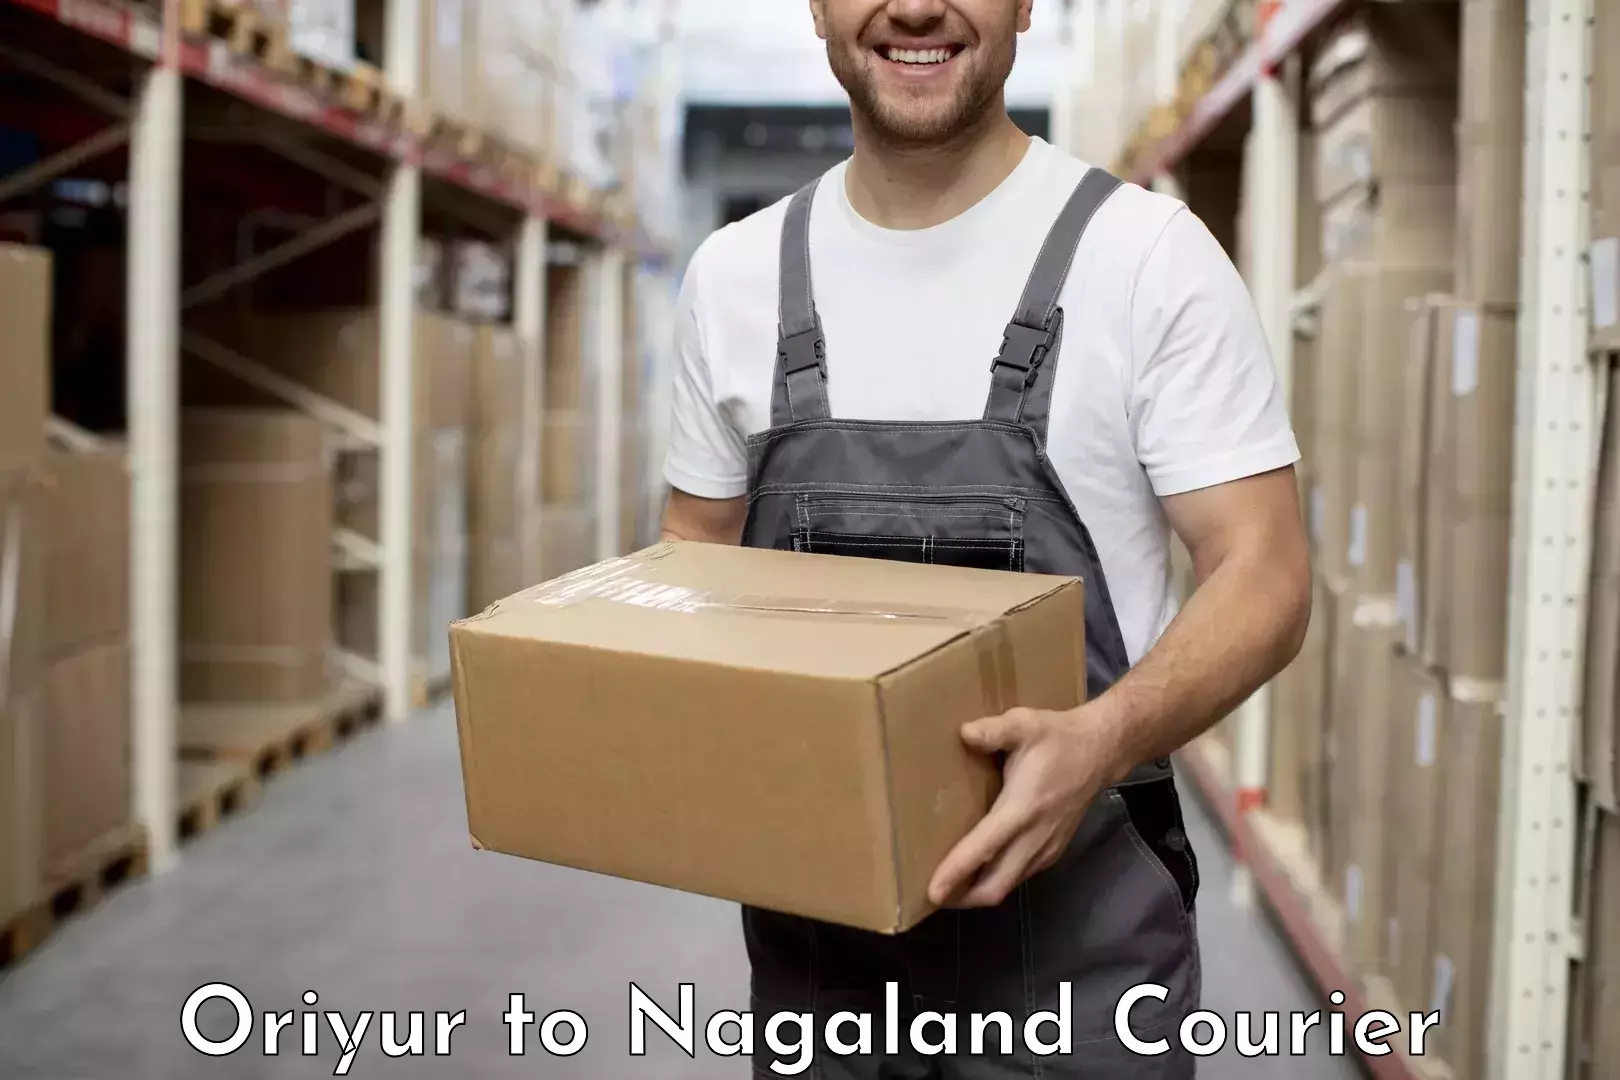 Parcel service for businesses Oriyur to Nagaland